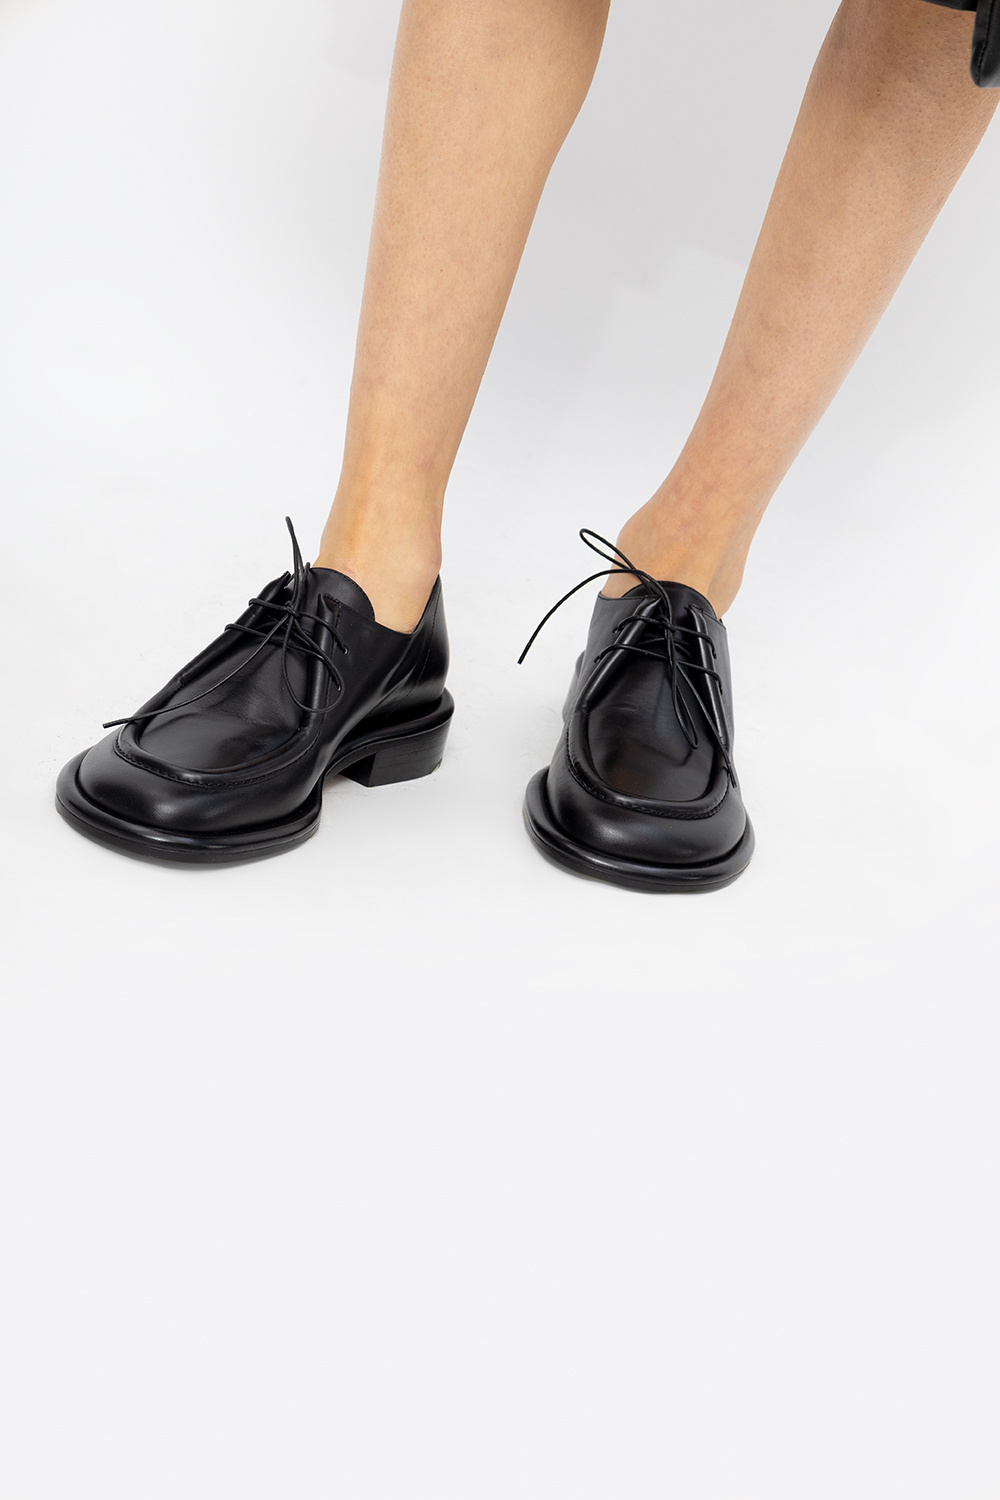 Proenza Schouler Jil Sander lace-up leather boots